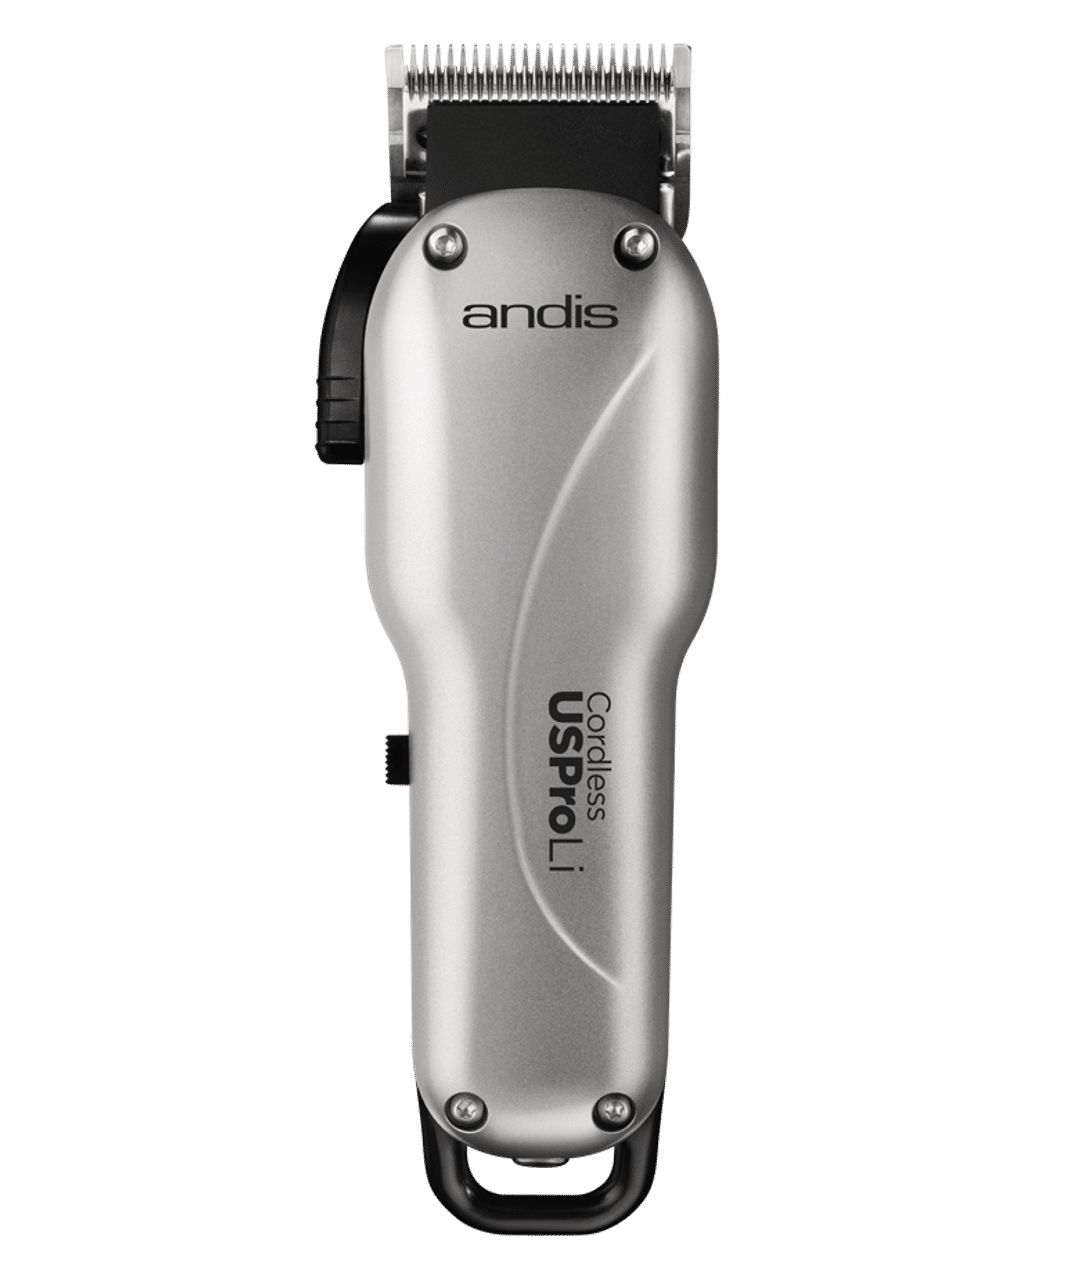 Andis Cordless Uspro Li Adjustable Blade Clipper